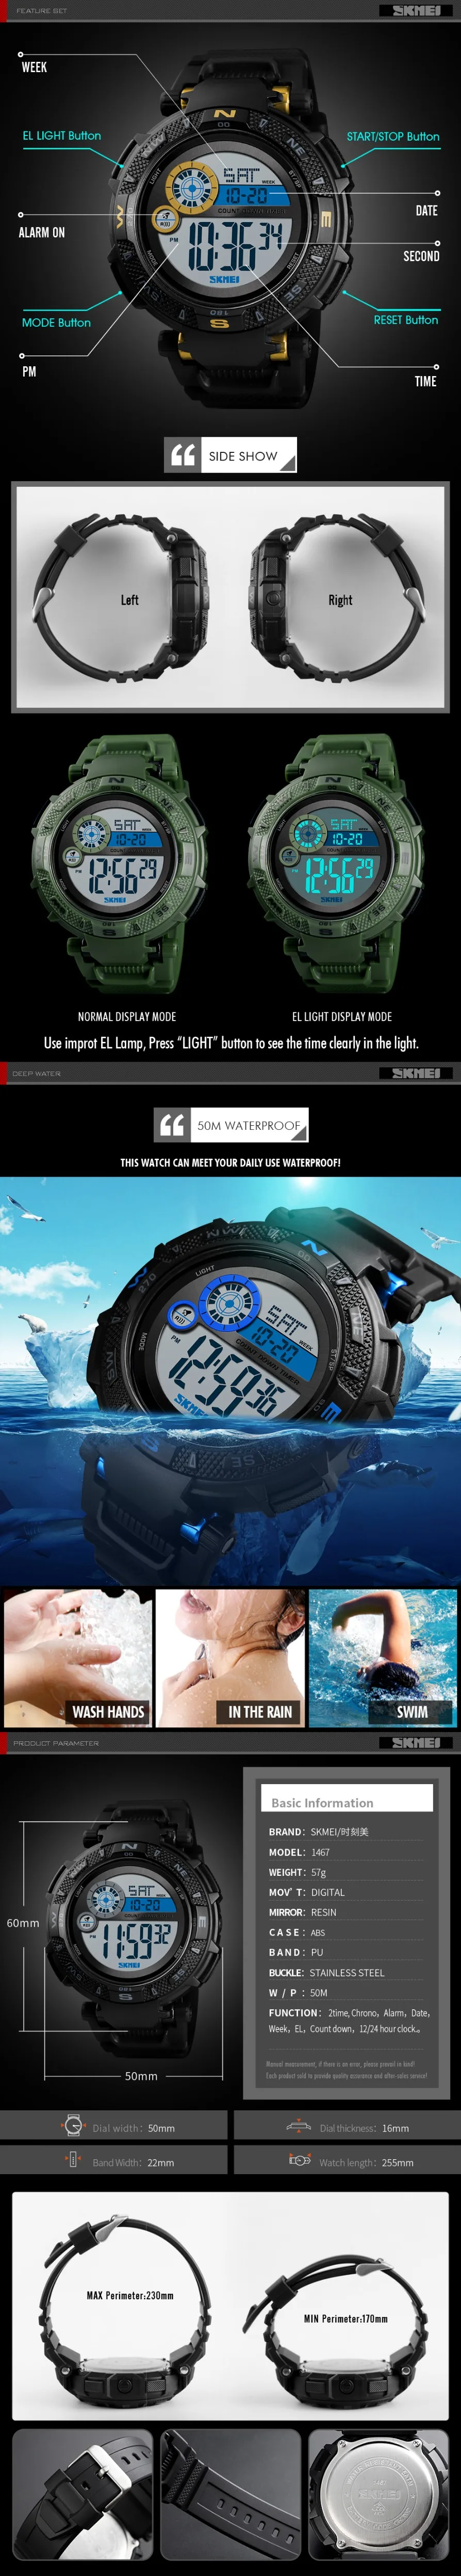 SKMEI цифровые часы мужские спортивные часы для улицы новые брендовые армейские военные мужские часы 50 м водонепроницаемые цифровые наручные часы montre homme